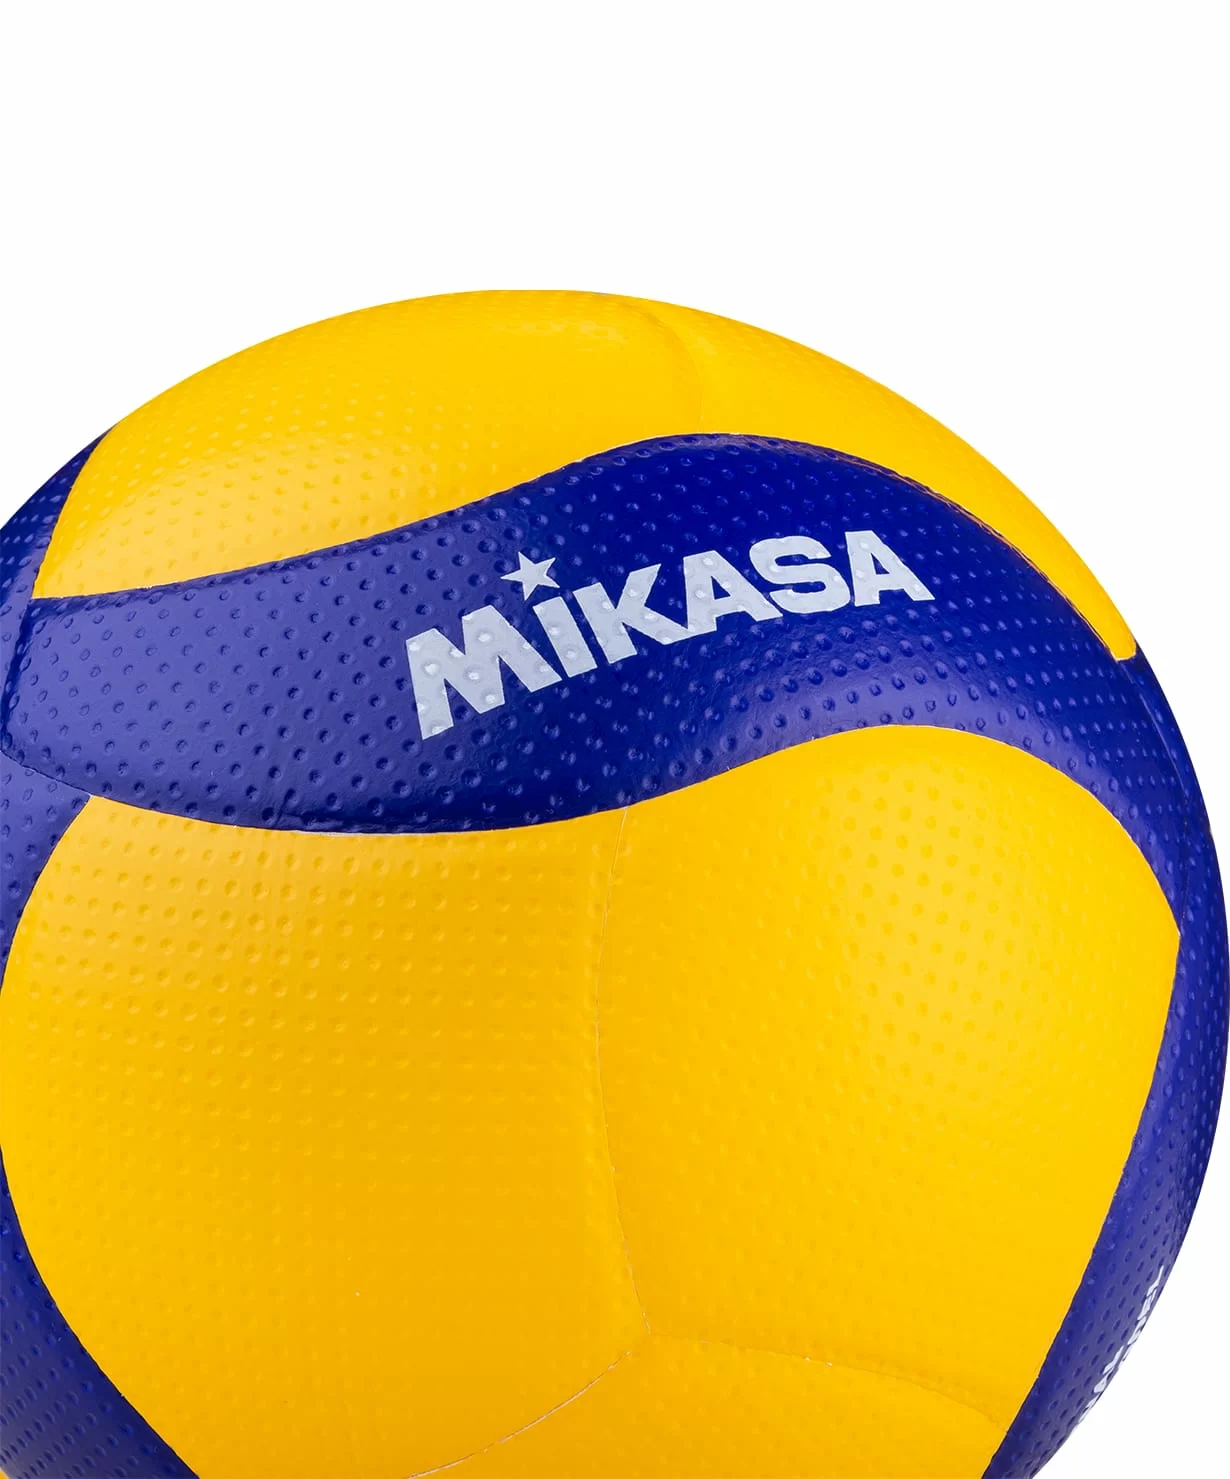 Фото Мяч волейбольный Mikasa V300W р.5 FIVB Approved желто-синий со склада магазина СпортЕВ